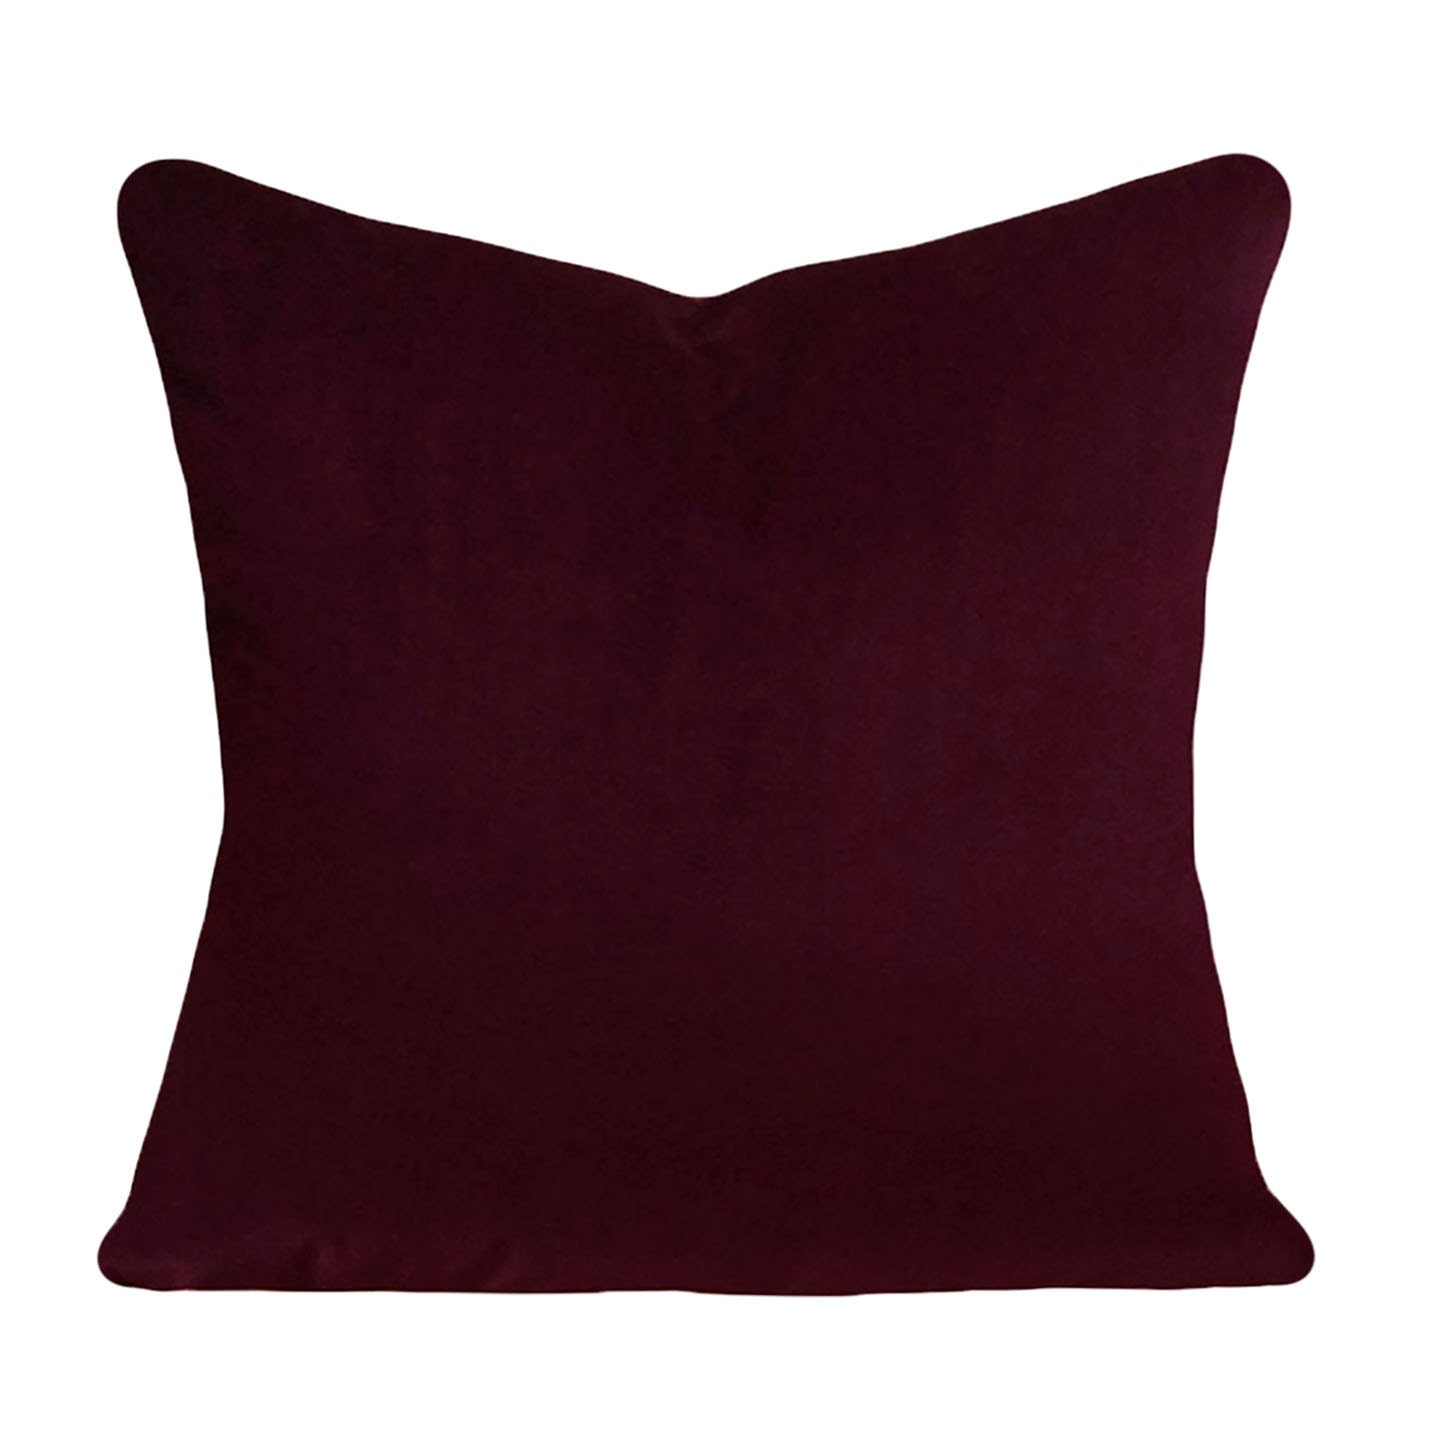  Burgundy  Velvet  Decorative Pillow  Cover Throw Pillow  Both